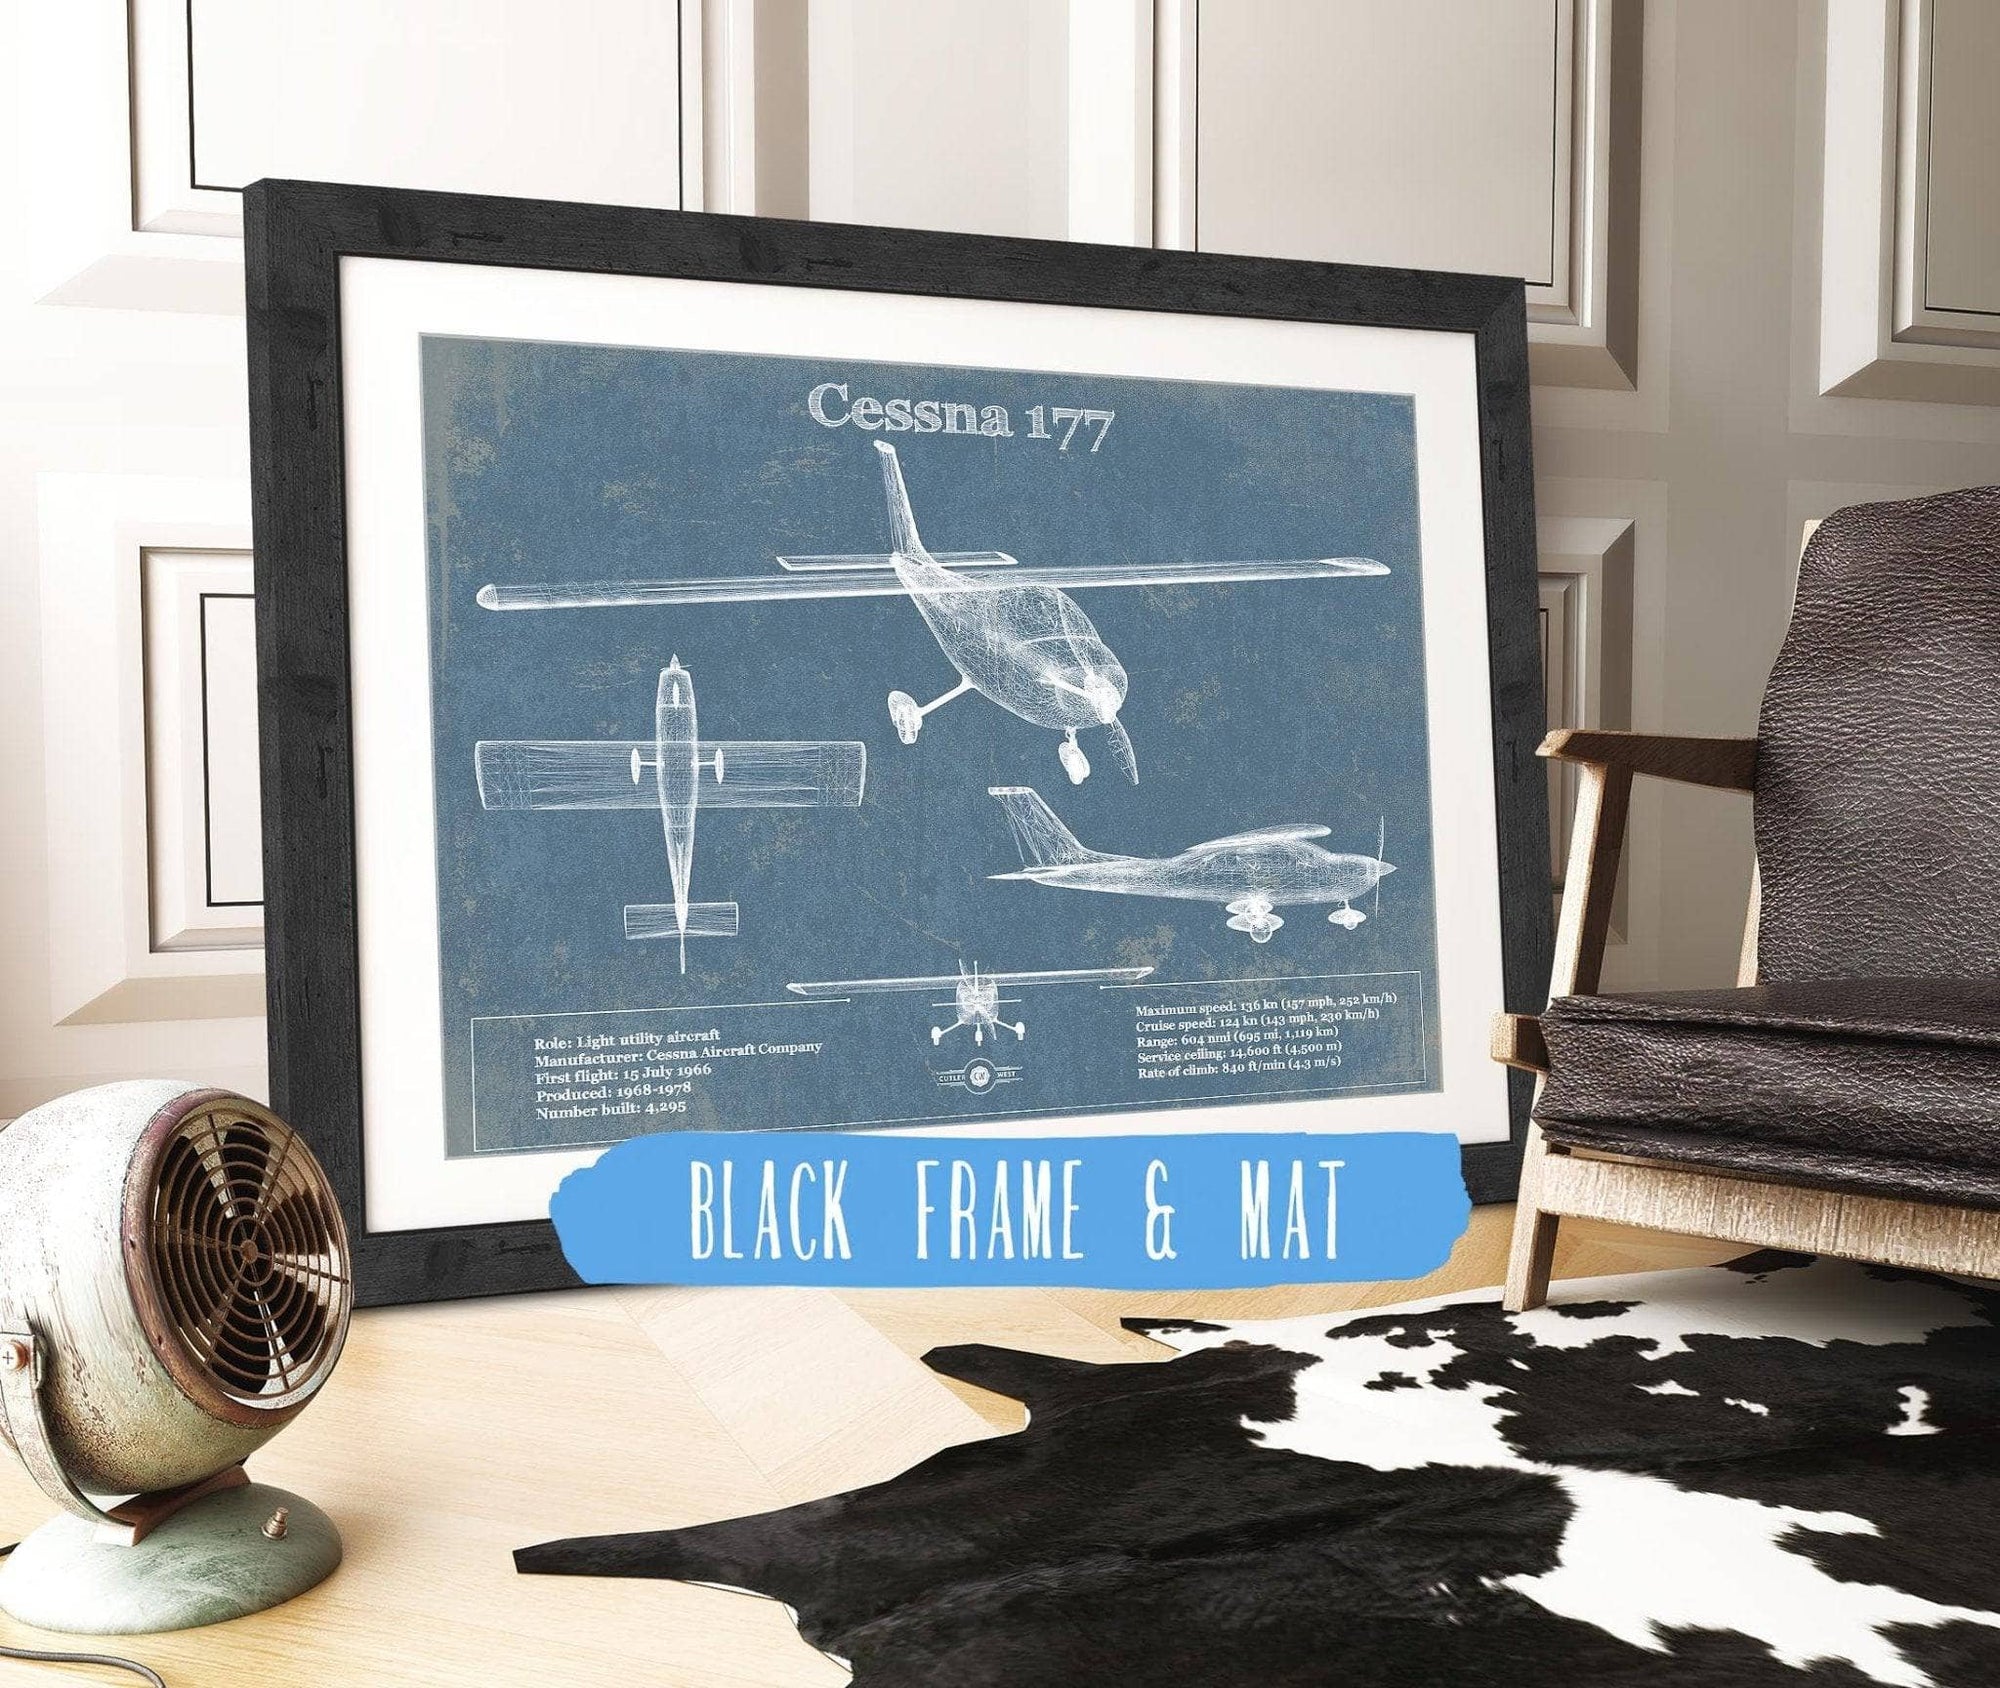 Cutler West Cessna Collection 14" x 11" / Black Frame & Mat Cessna 177 (Cardinal) Vintage Blueprint Airplane Print 833110160-TOP